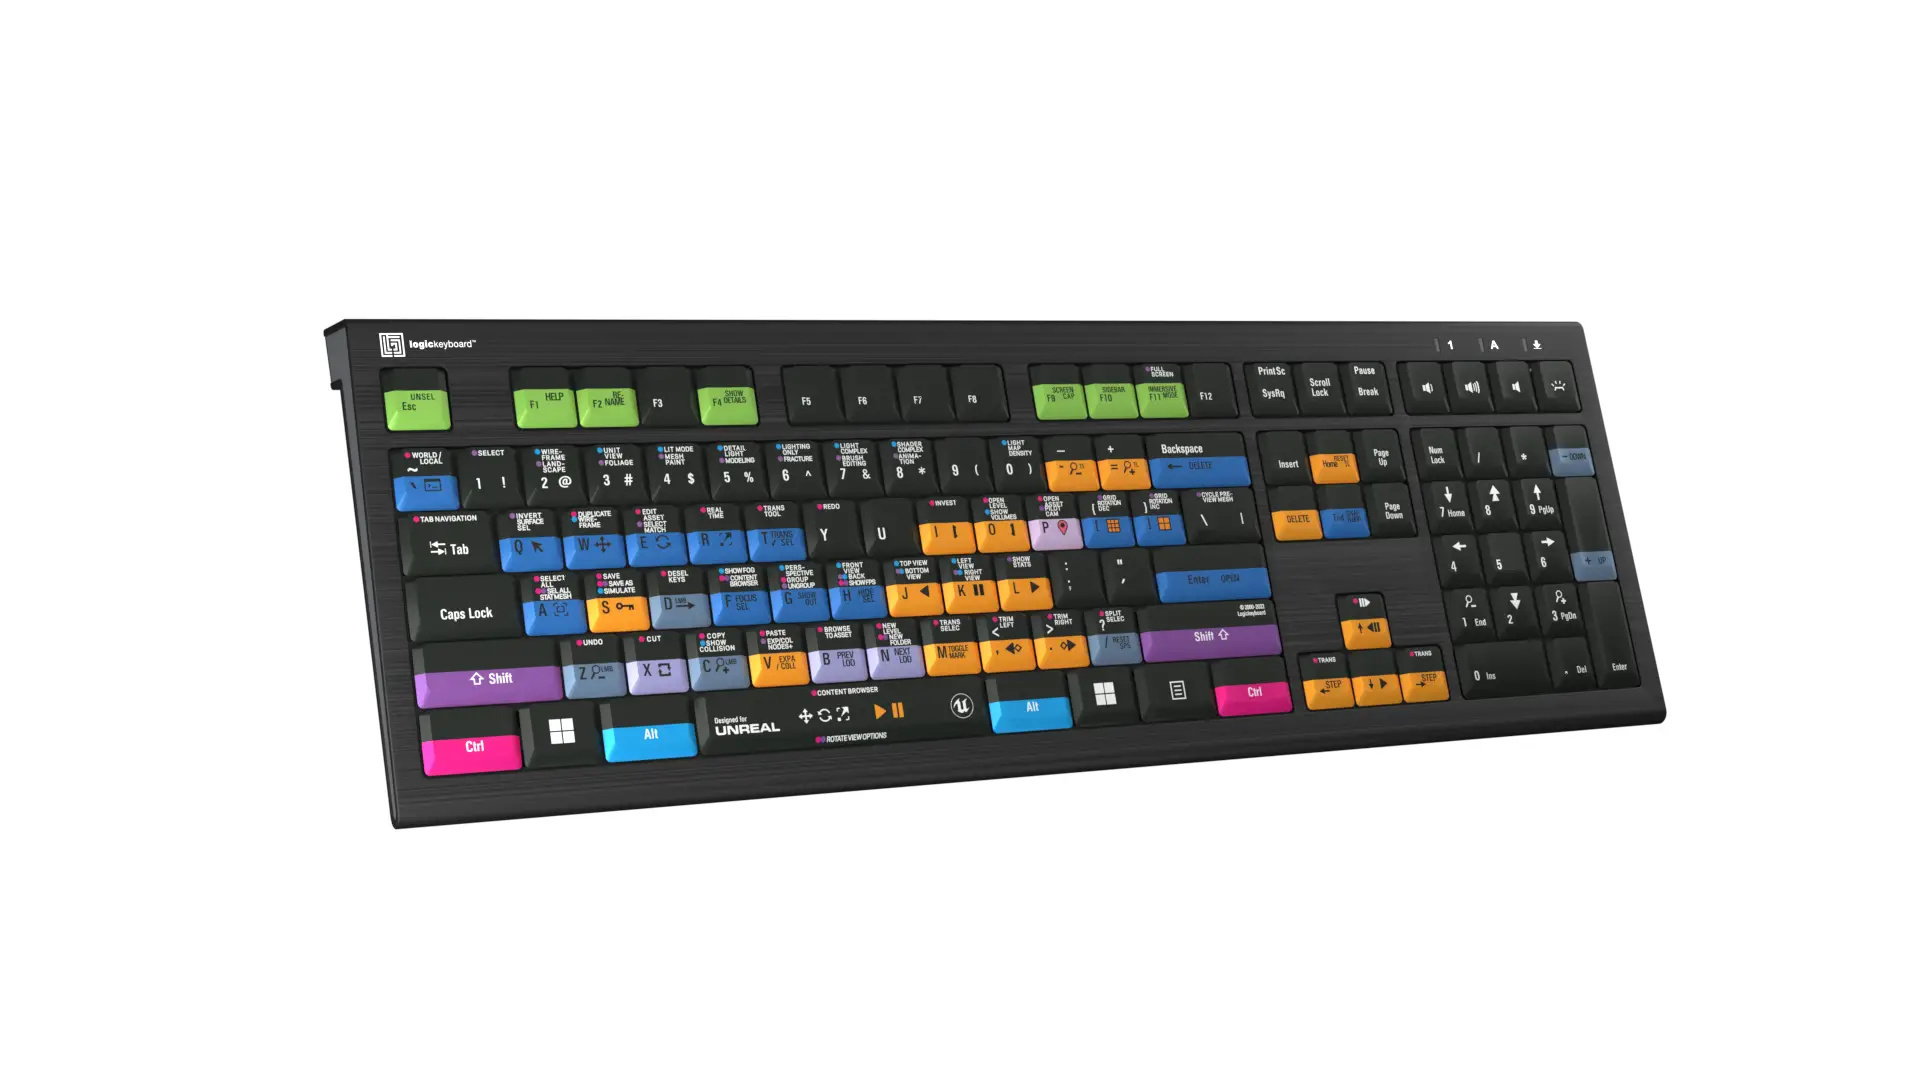 LogicKeyboard Unreal Engine 5 - PC ASTRA 2 Backlit Keyboard - US English